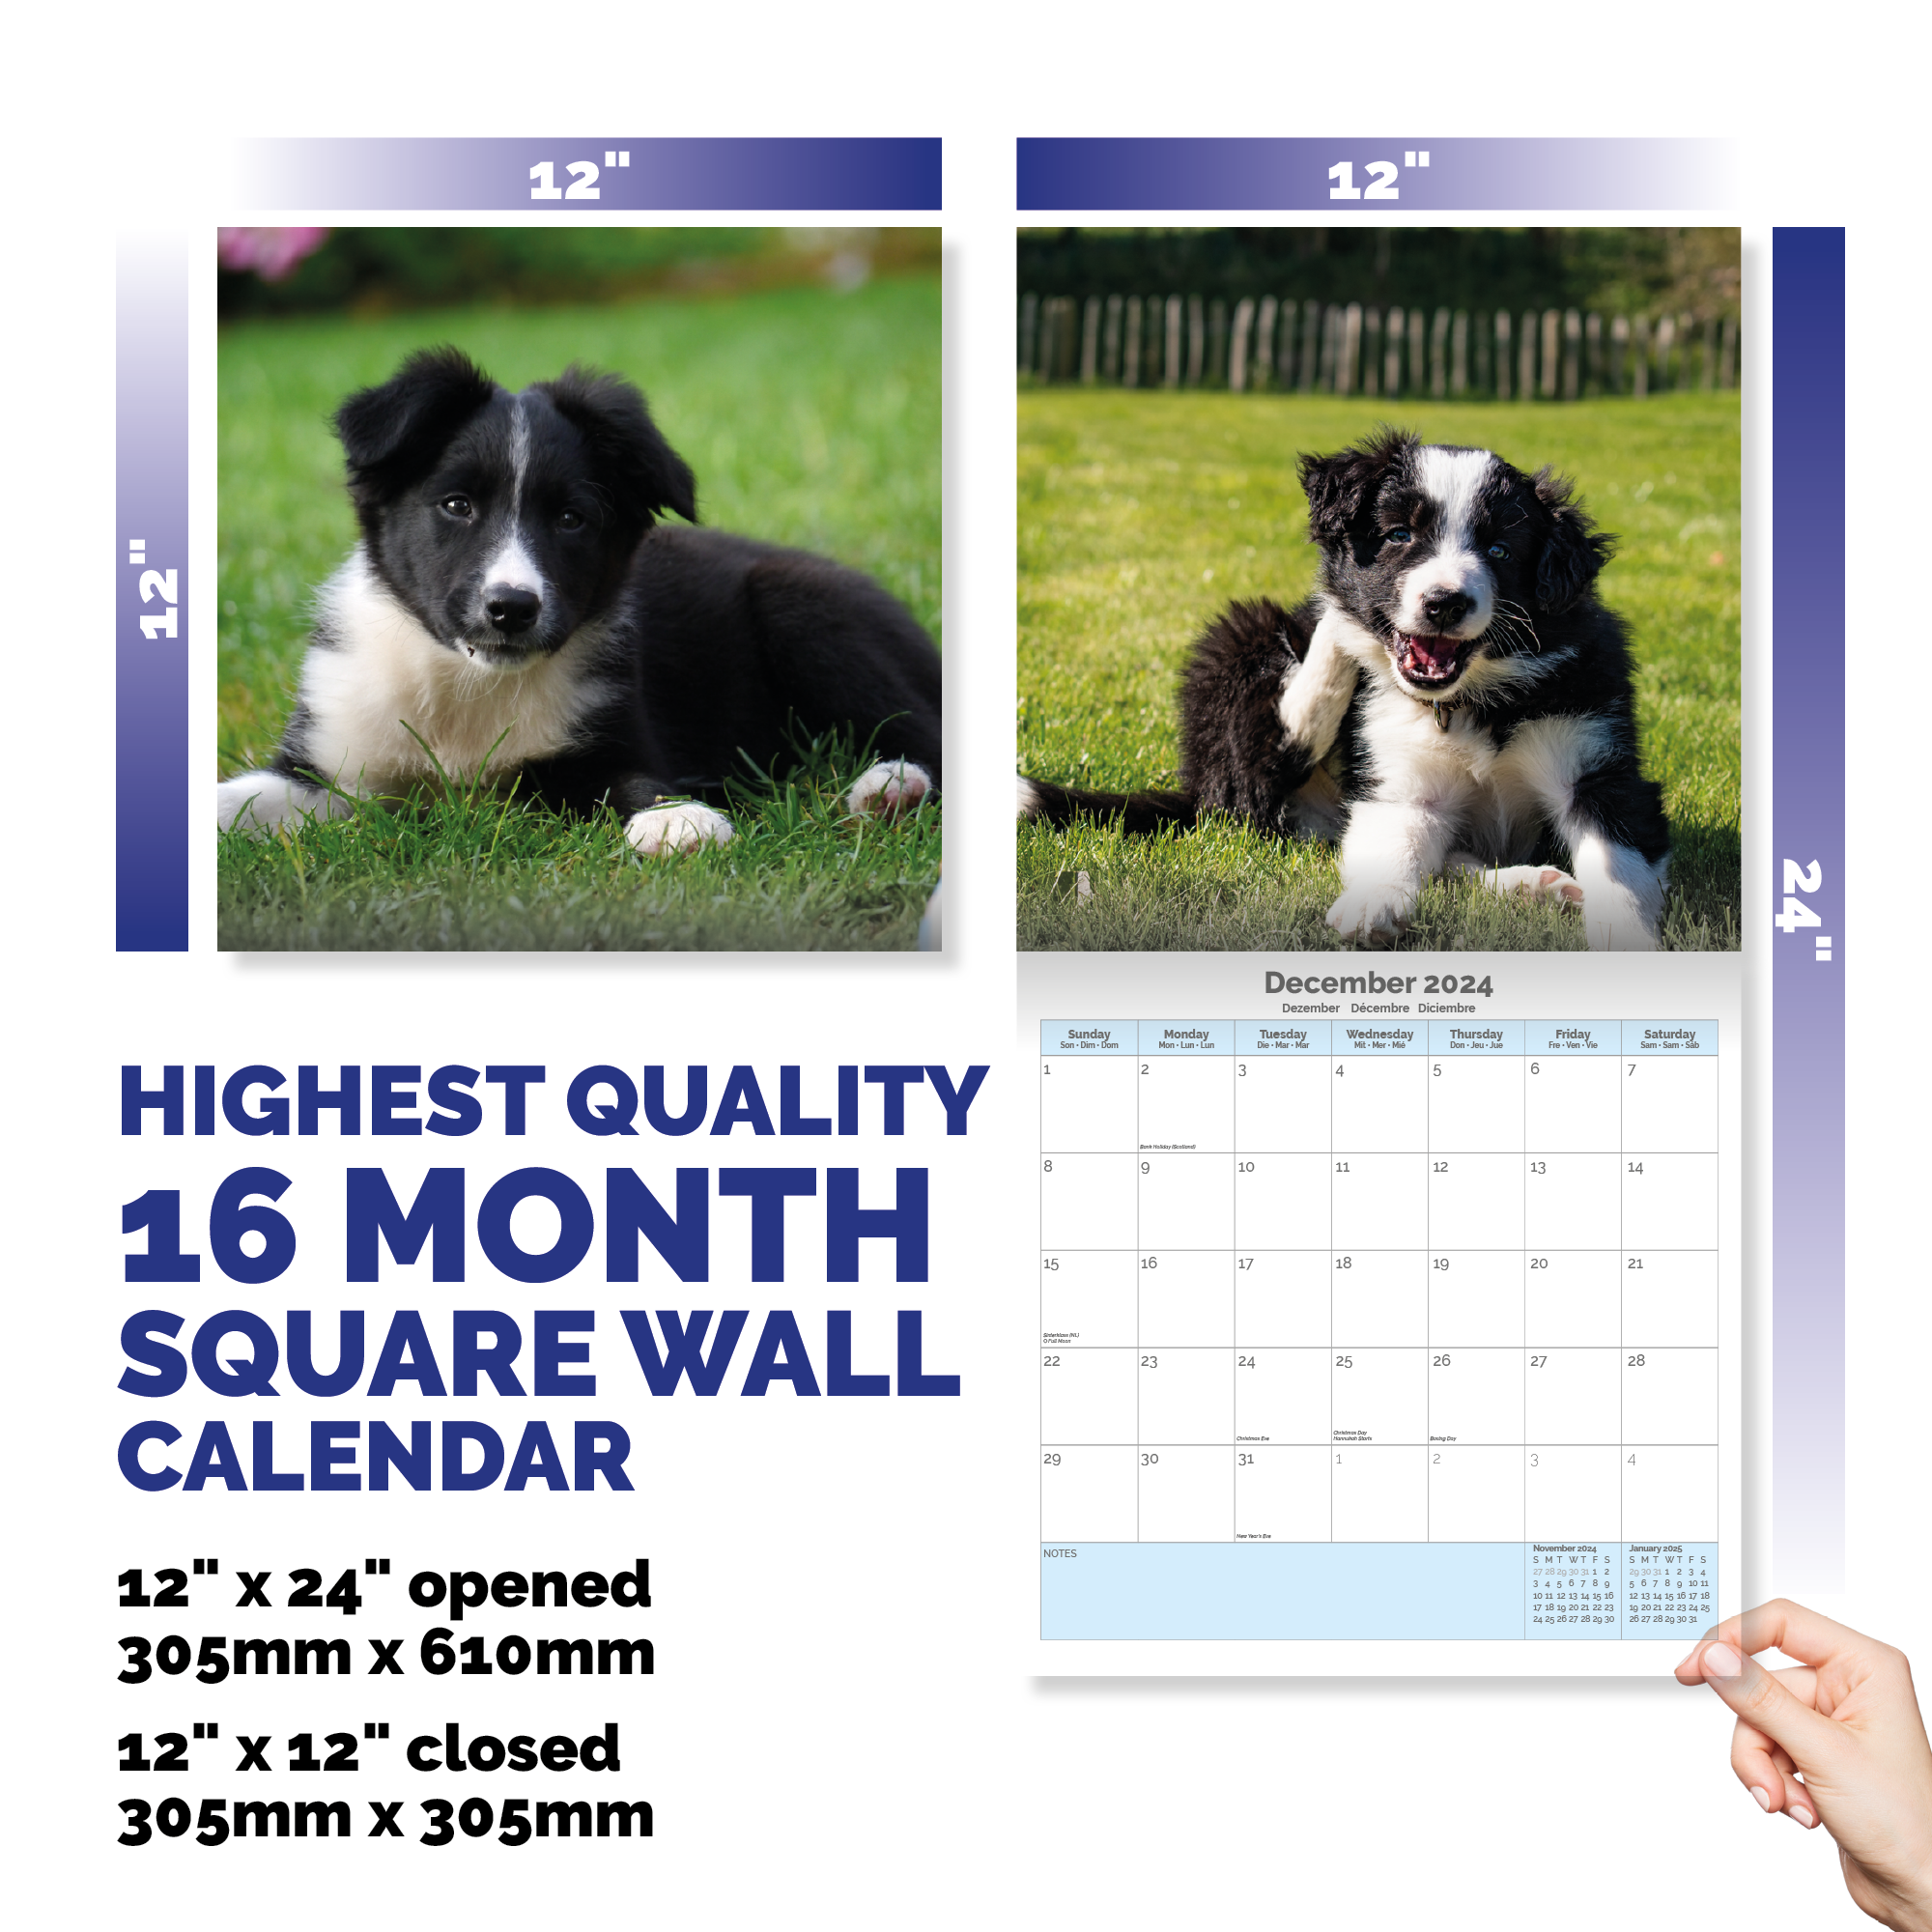 Border Collie Puppies Calendar 2024